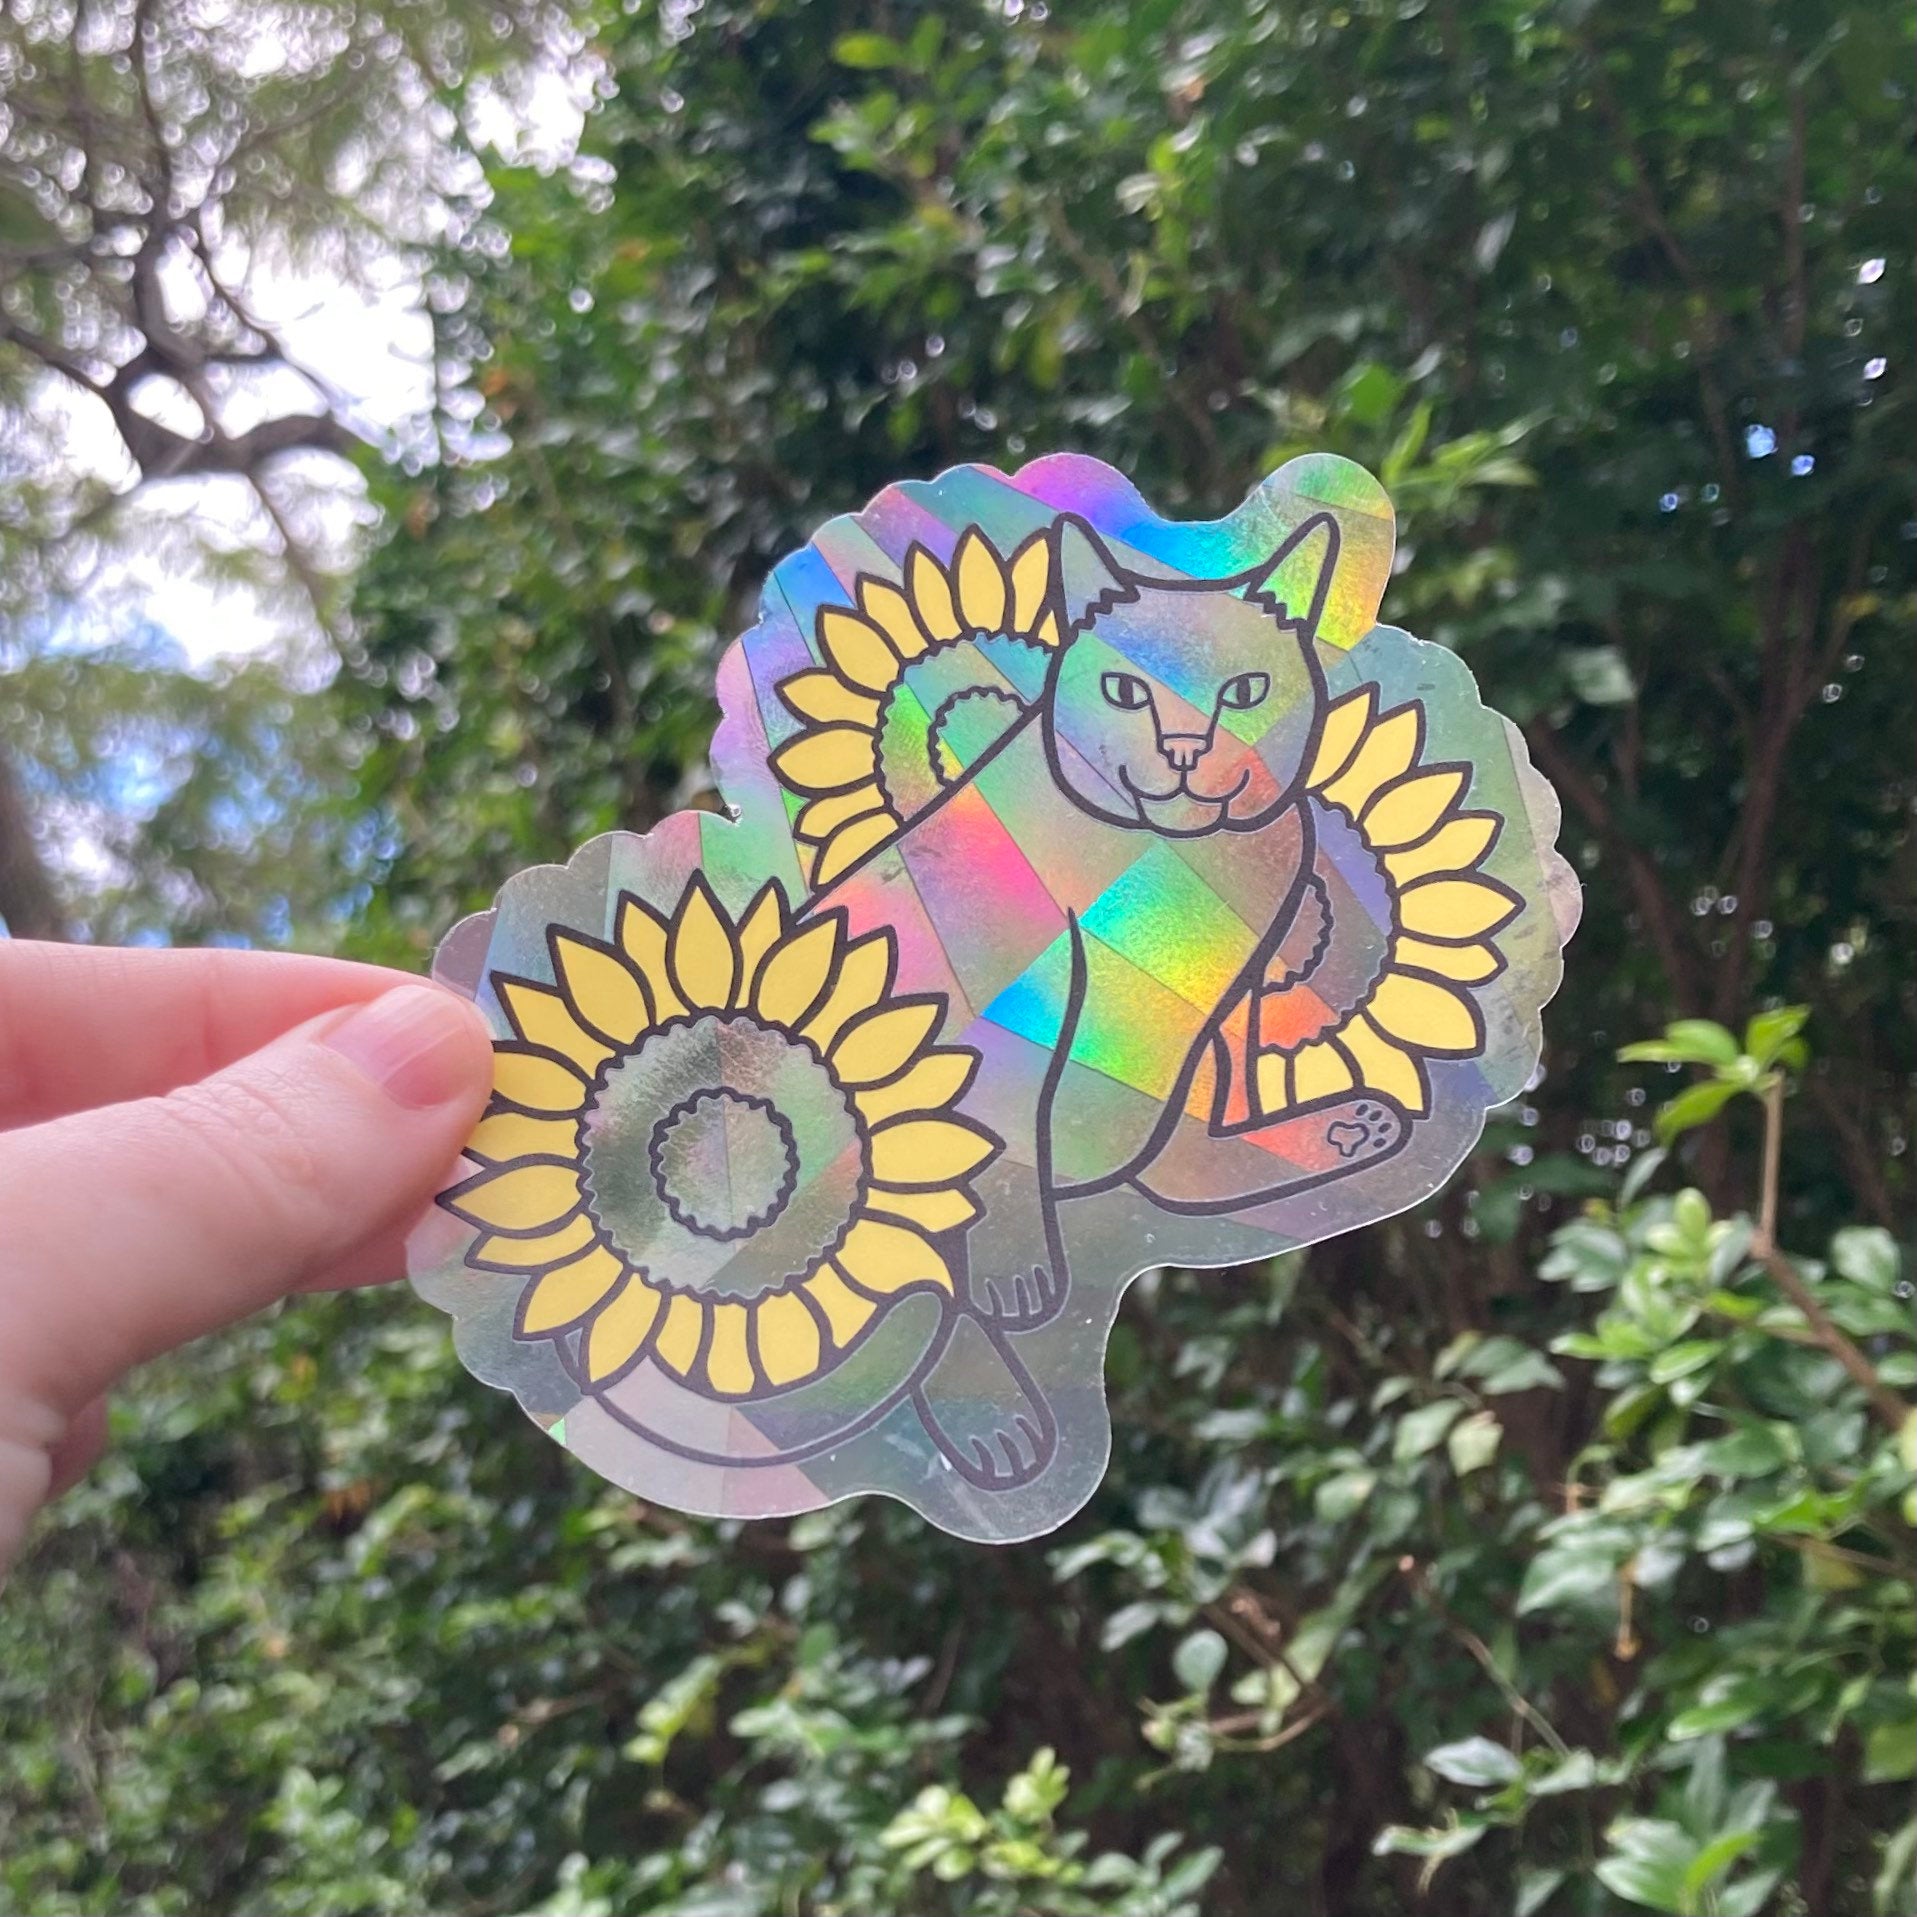 Sunflower Cat Prismatic Rainbow Suncatcher Decal Sticker - 4” wide, transparent sun catcher - stained glass window effect